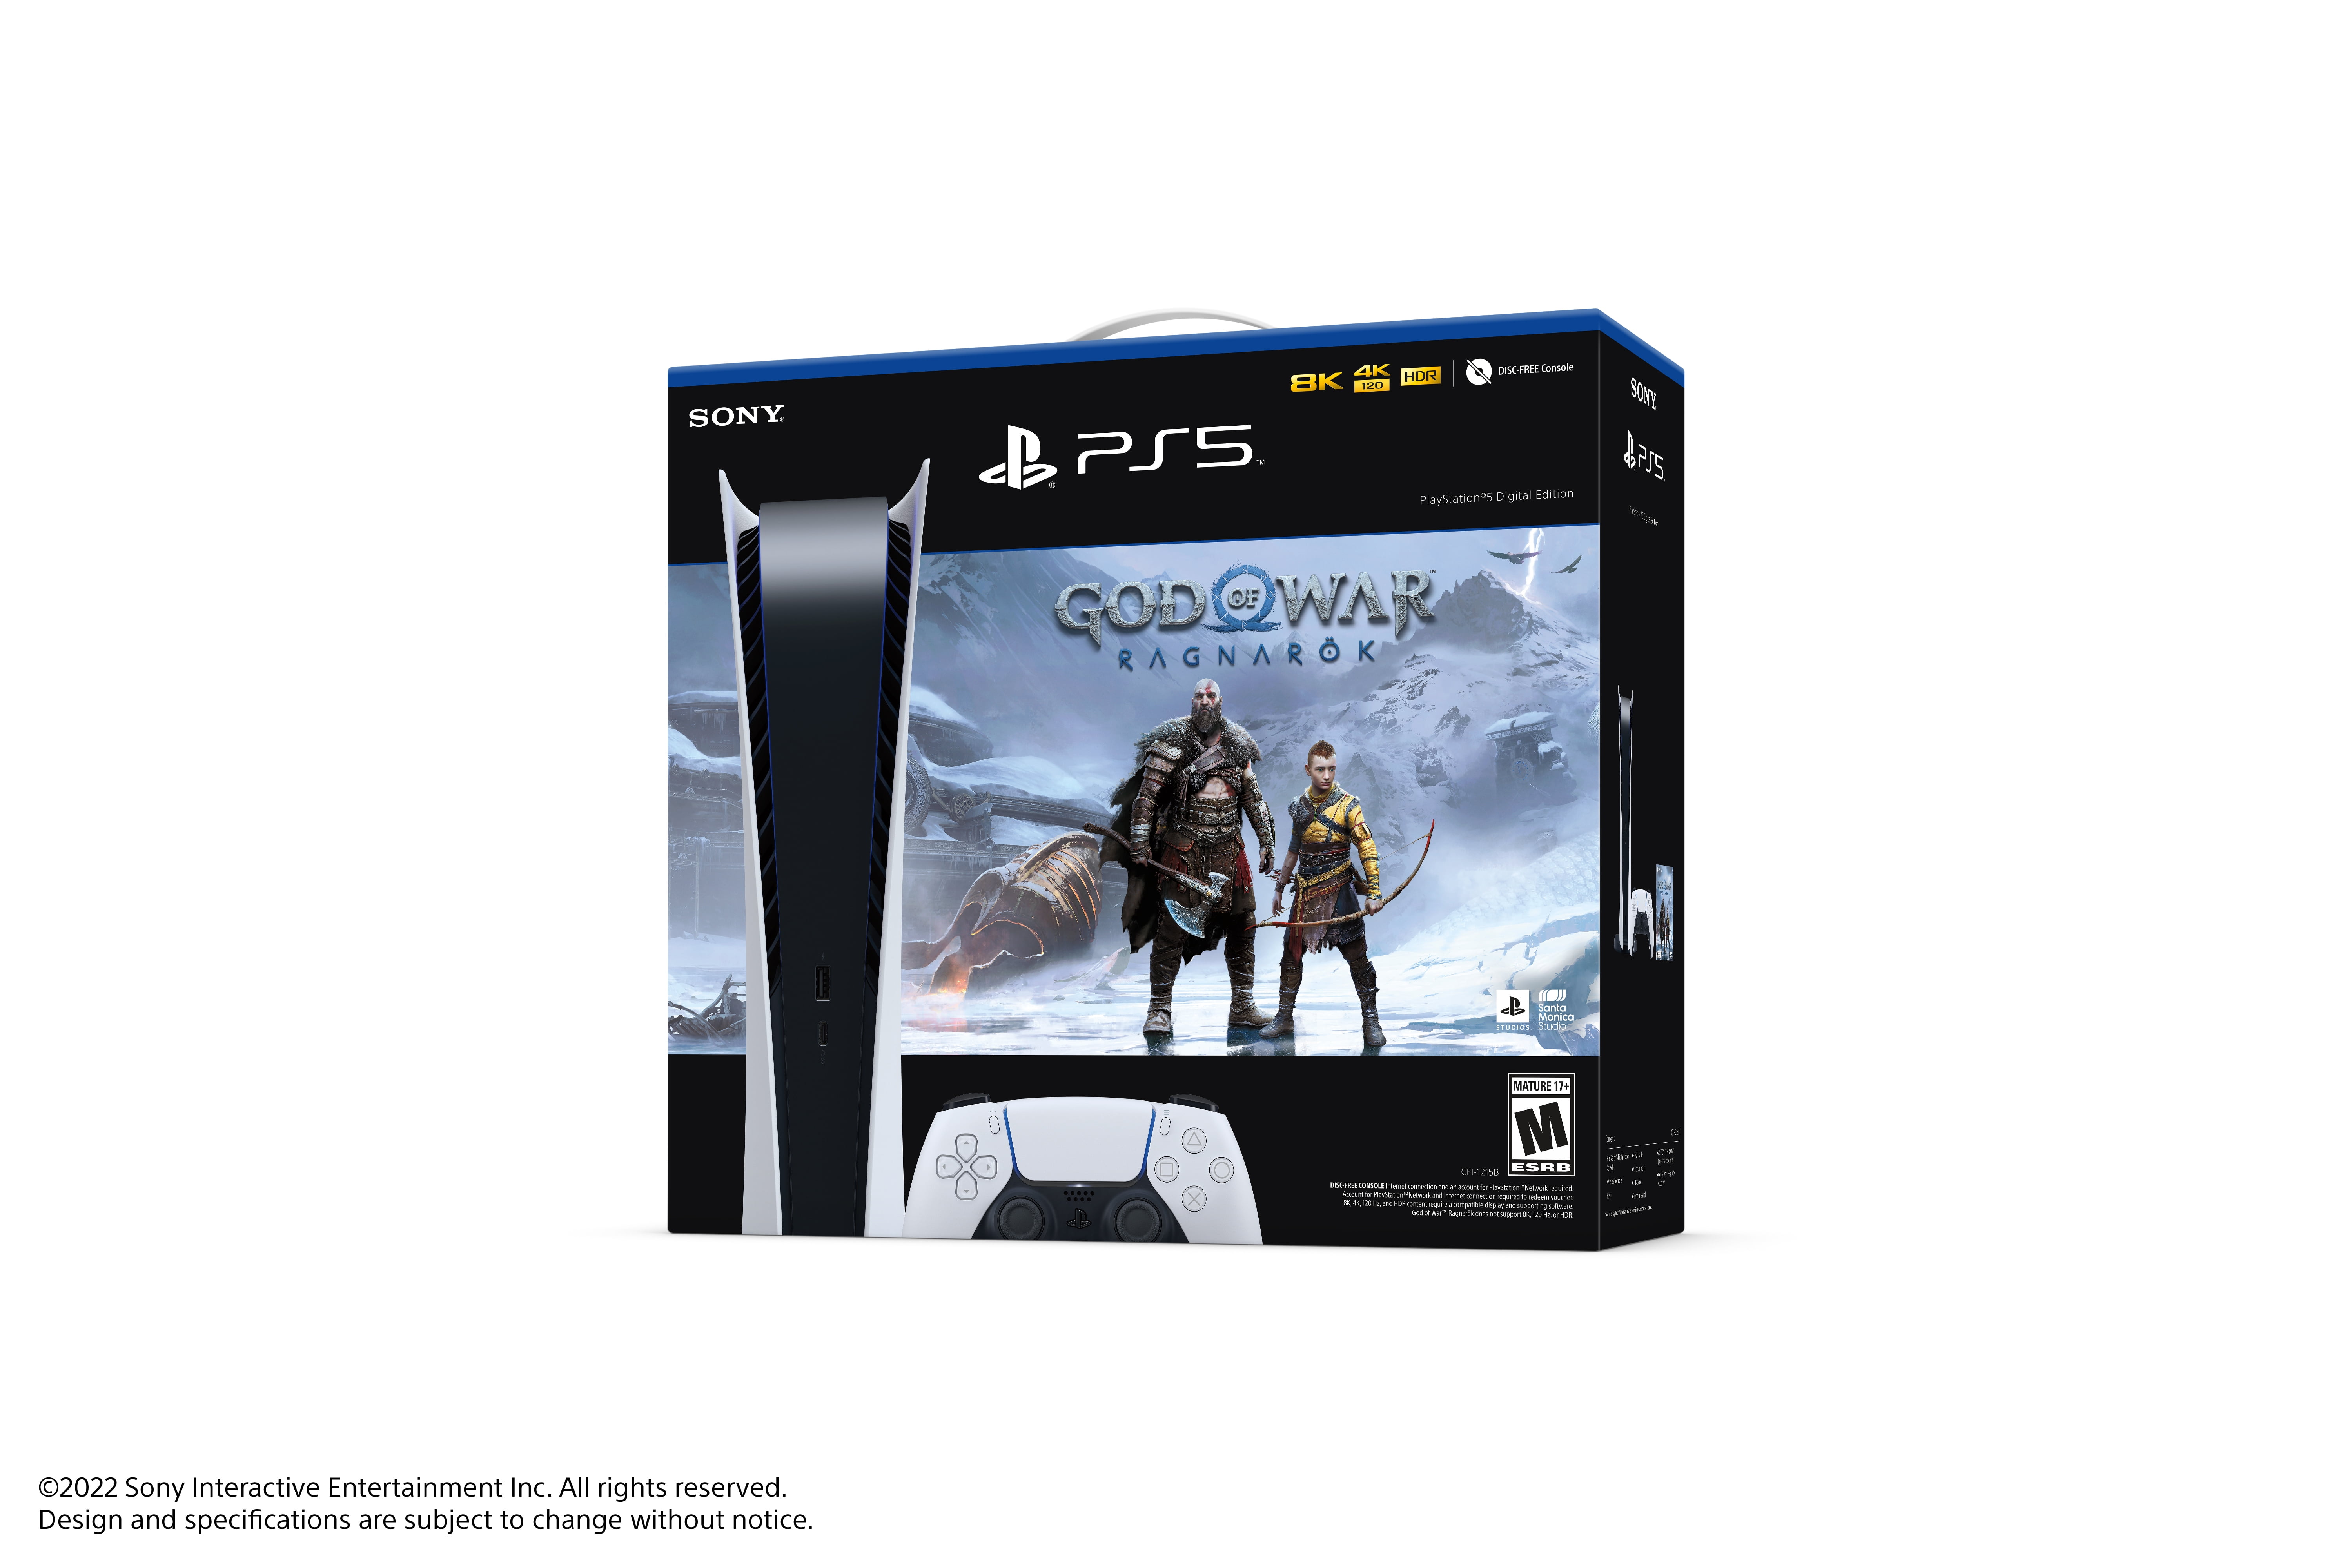 PlayStation®5 Digital Edition - God of War™ Ragnarök Bundle